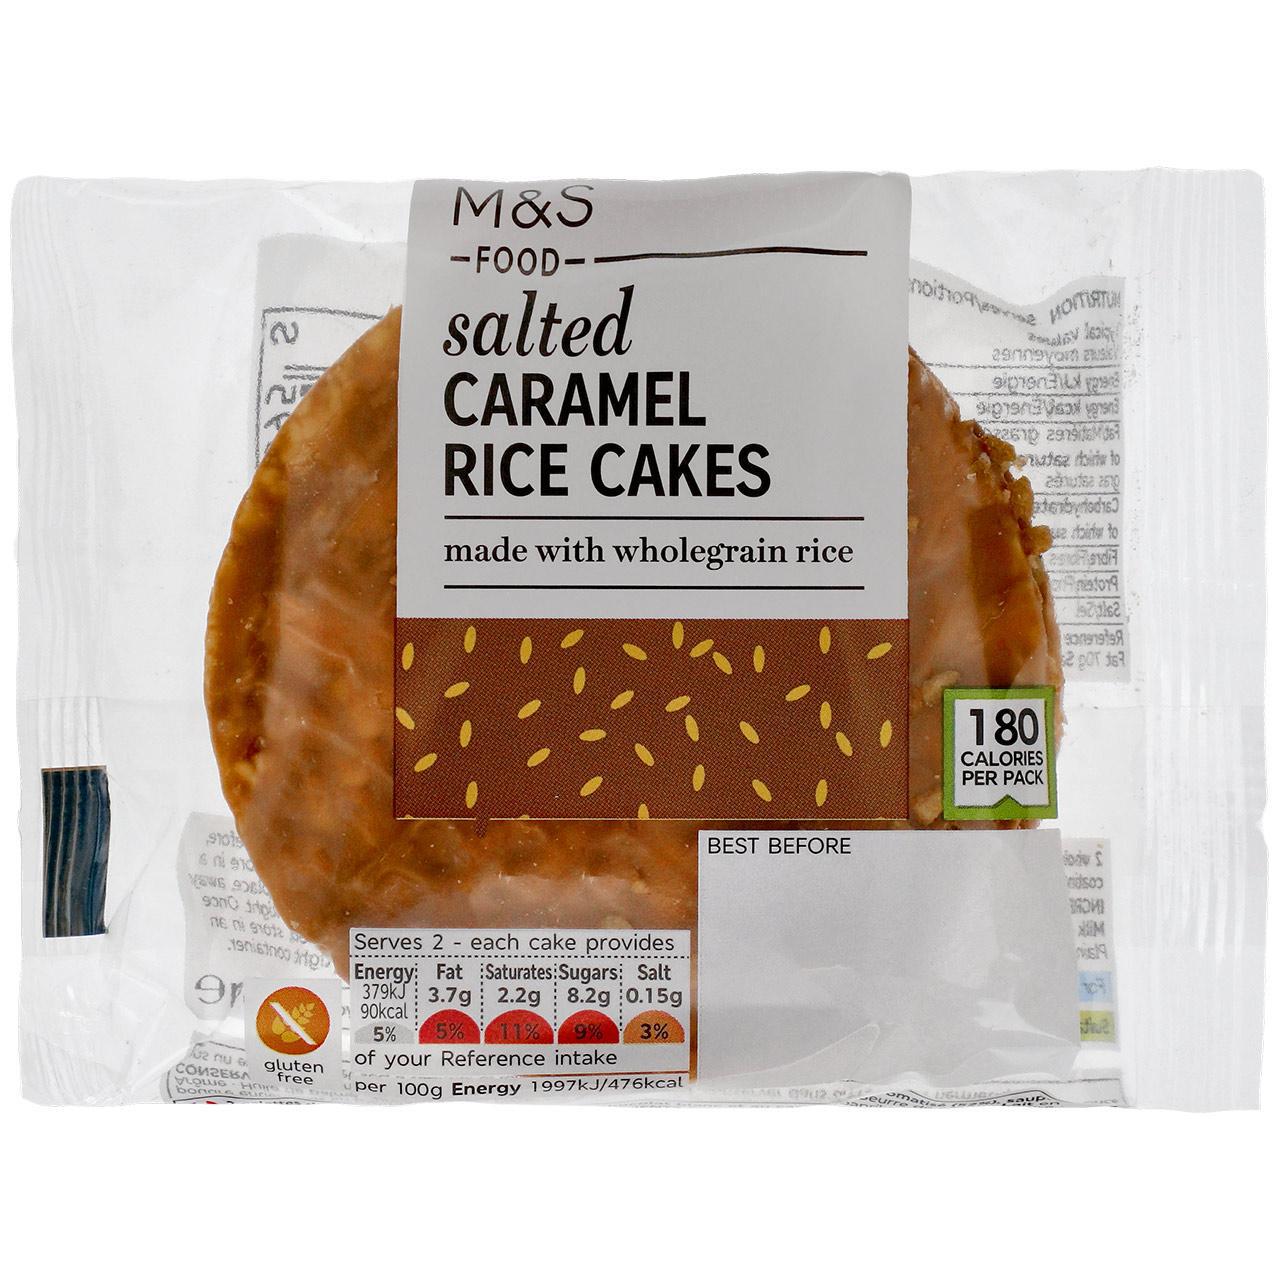 M&S Salted Caramel Rice Cakes 38g